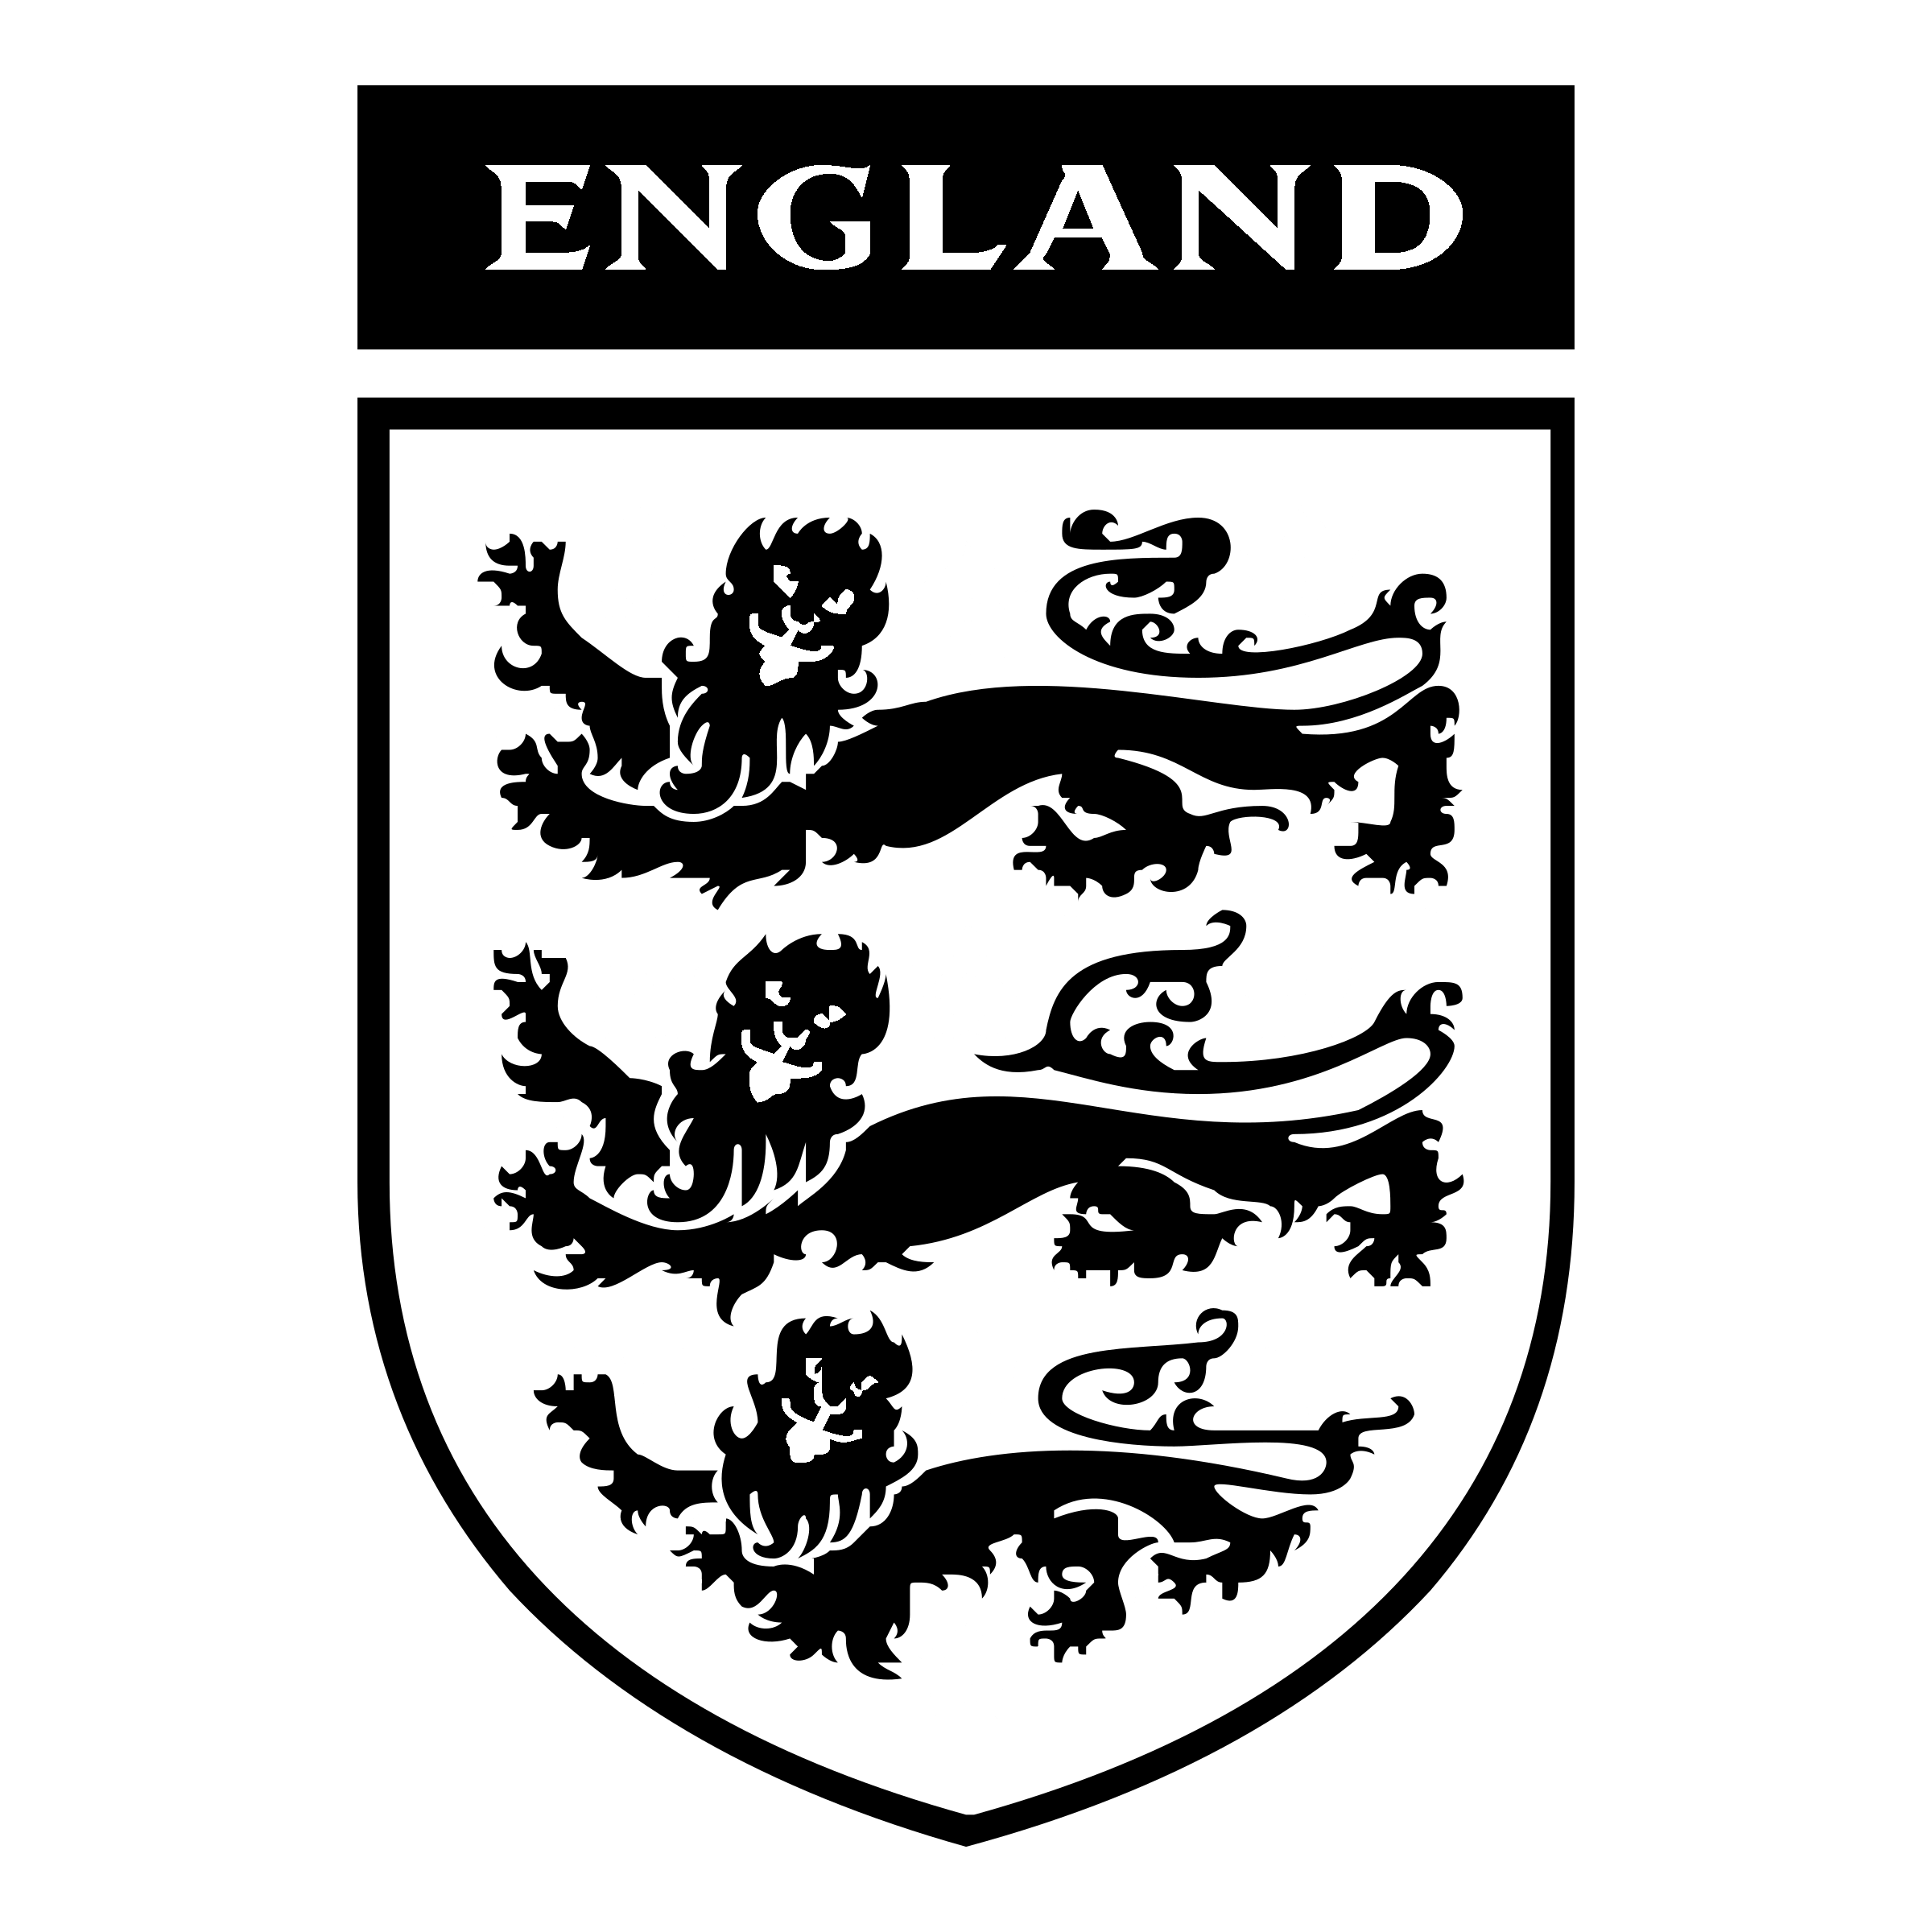 England Logo - England Football Association Logo PNG Transparent & SVG Vector ...